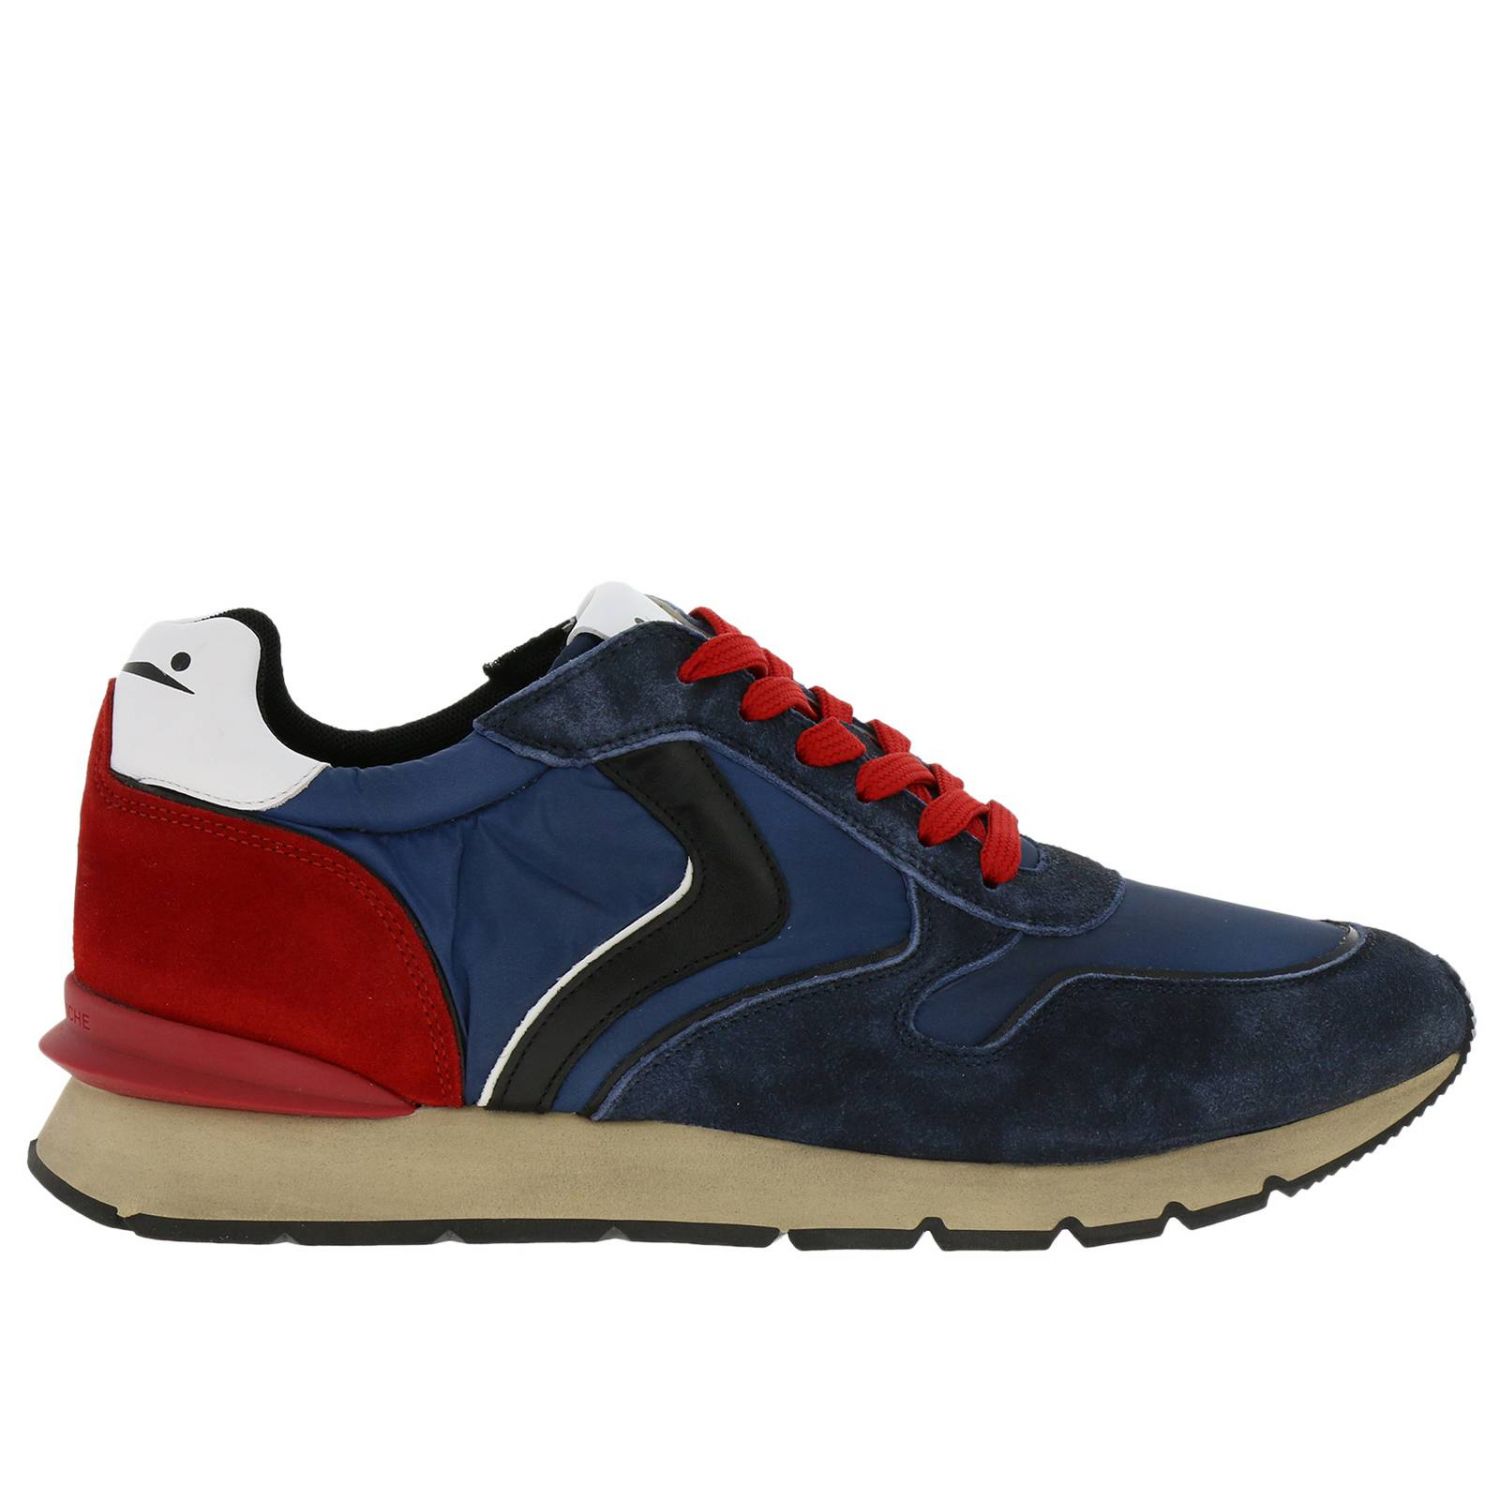 Voile Blanche Outlet: Shoes men - Blue | Sneakers Voile Blanche 2012764 ...